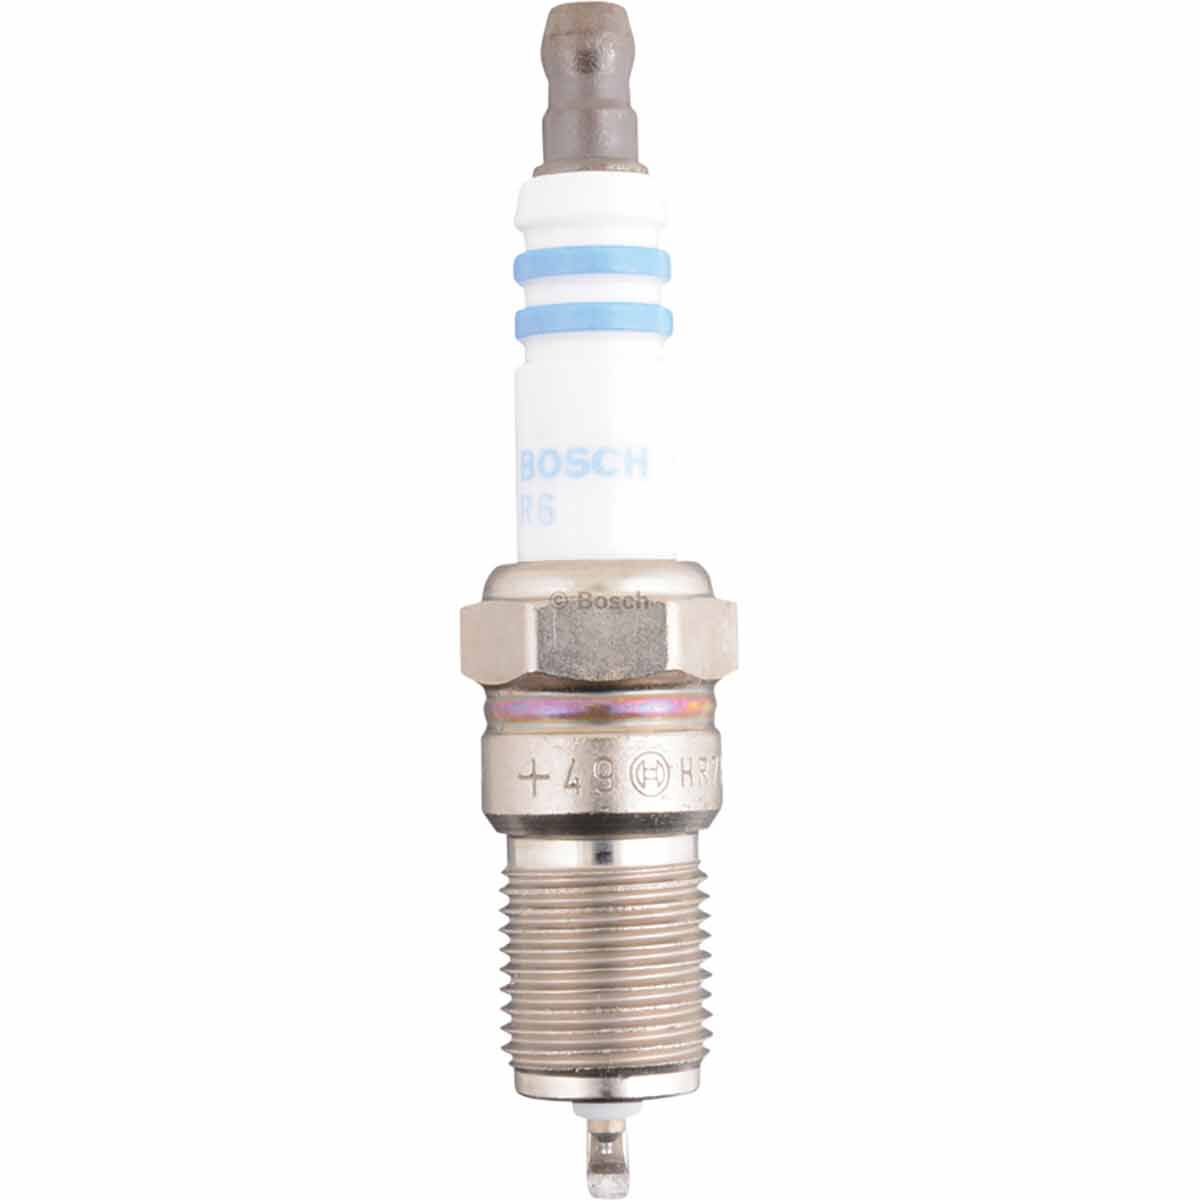 Bosch Spark Plug Single HR7KPP33+ / HR7KPP33, , scaau_hi-res